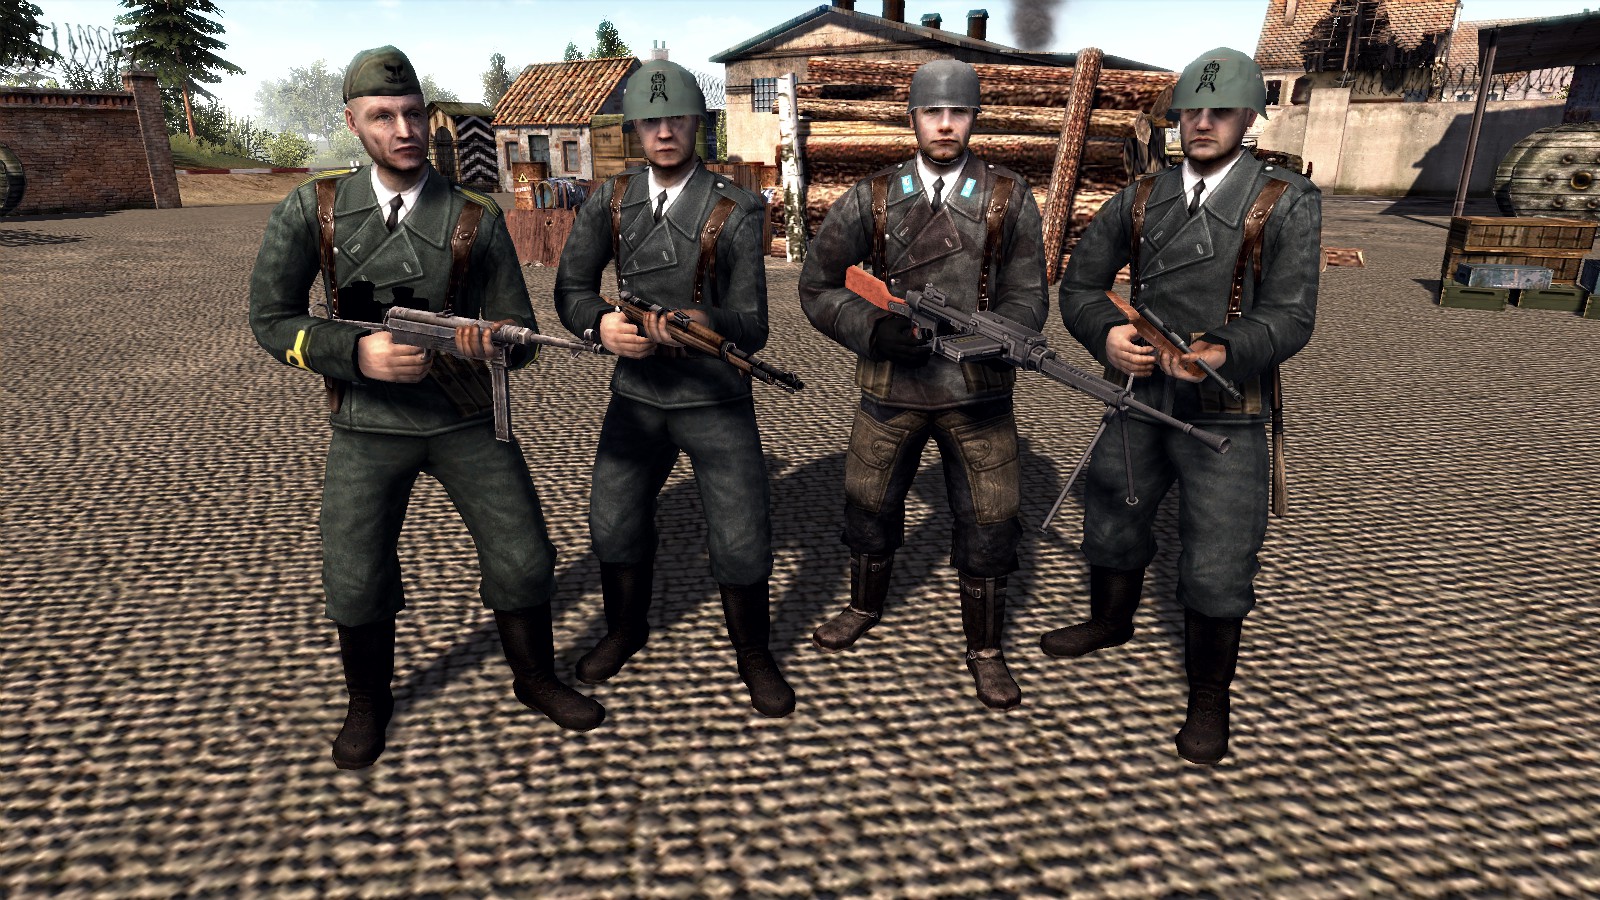 men of war assault squad 2 download updates